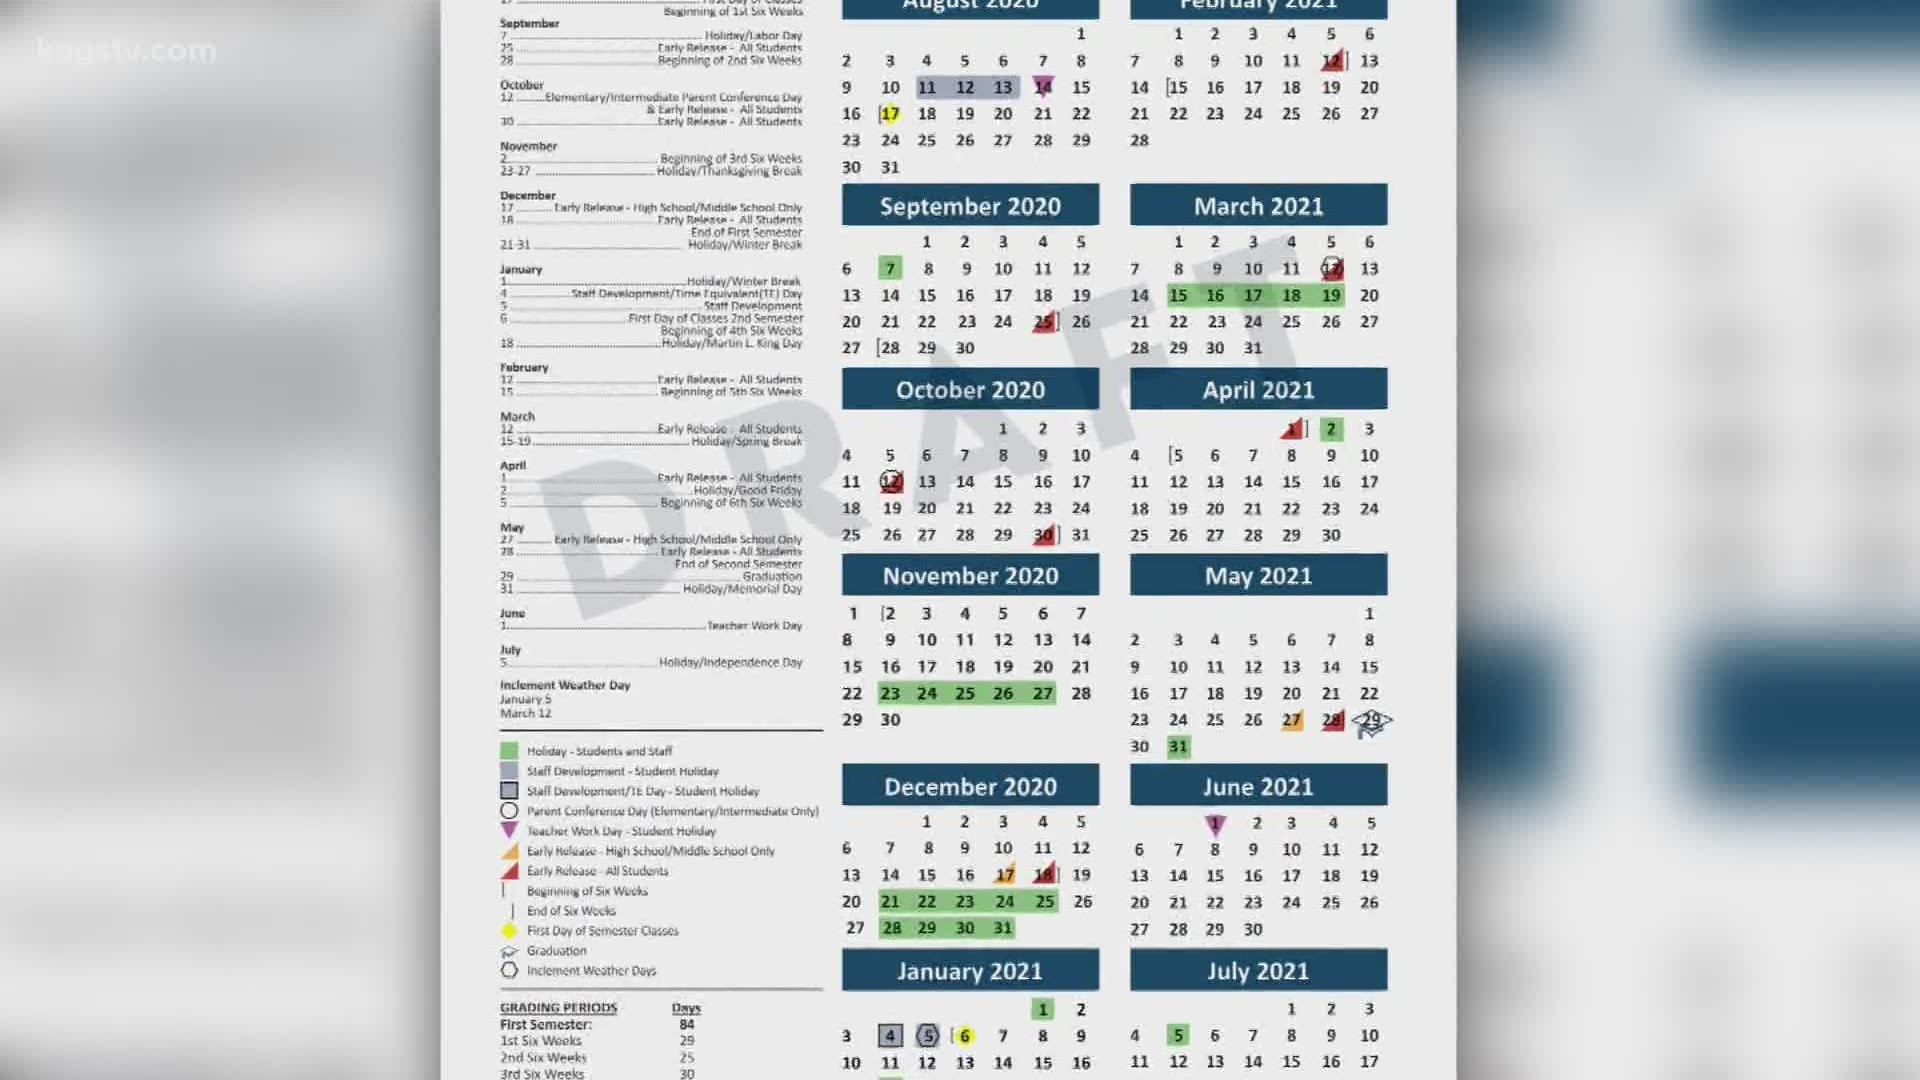 College Station Isd Calendar 2022 23 Bryan Isd Adds Eight Days To 2020-2021 Academic Calendar | Kagstv.com